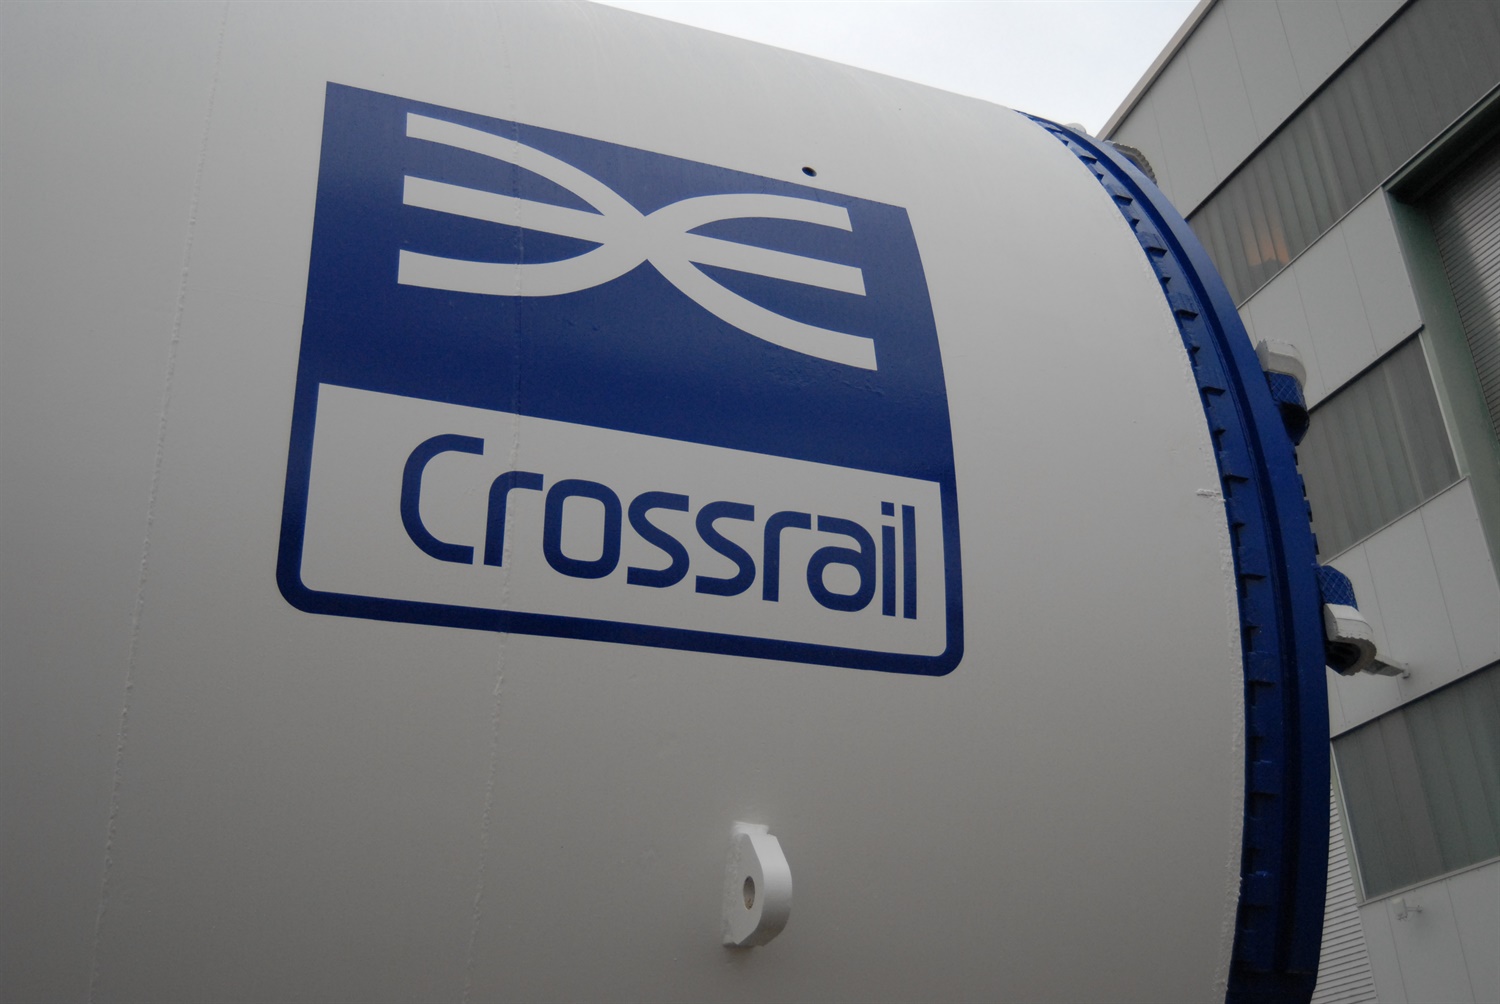 Crossrail dips below its budget as progress slows down